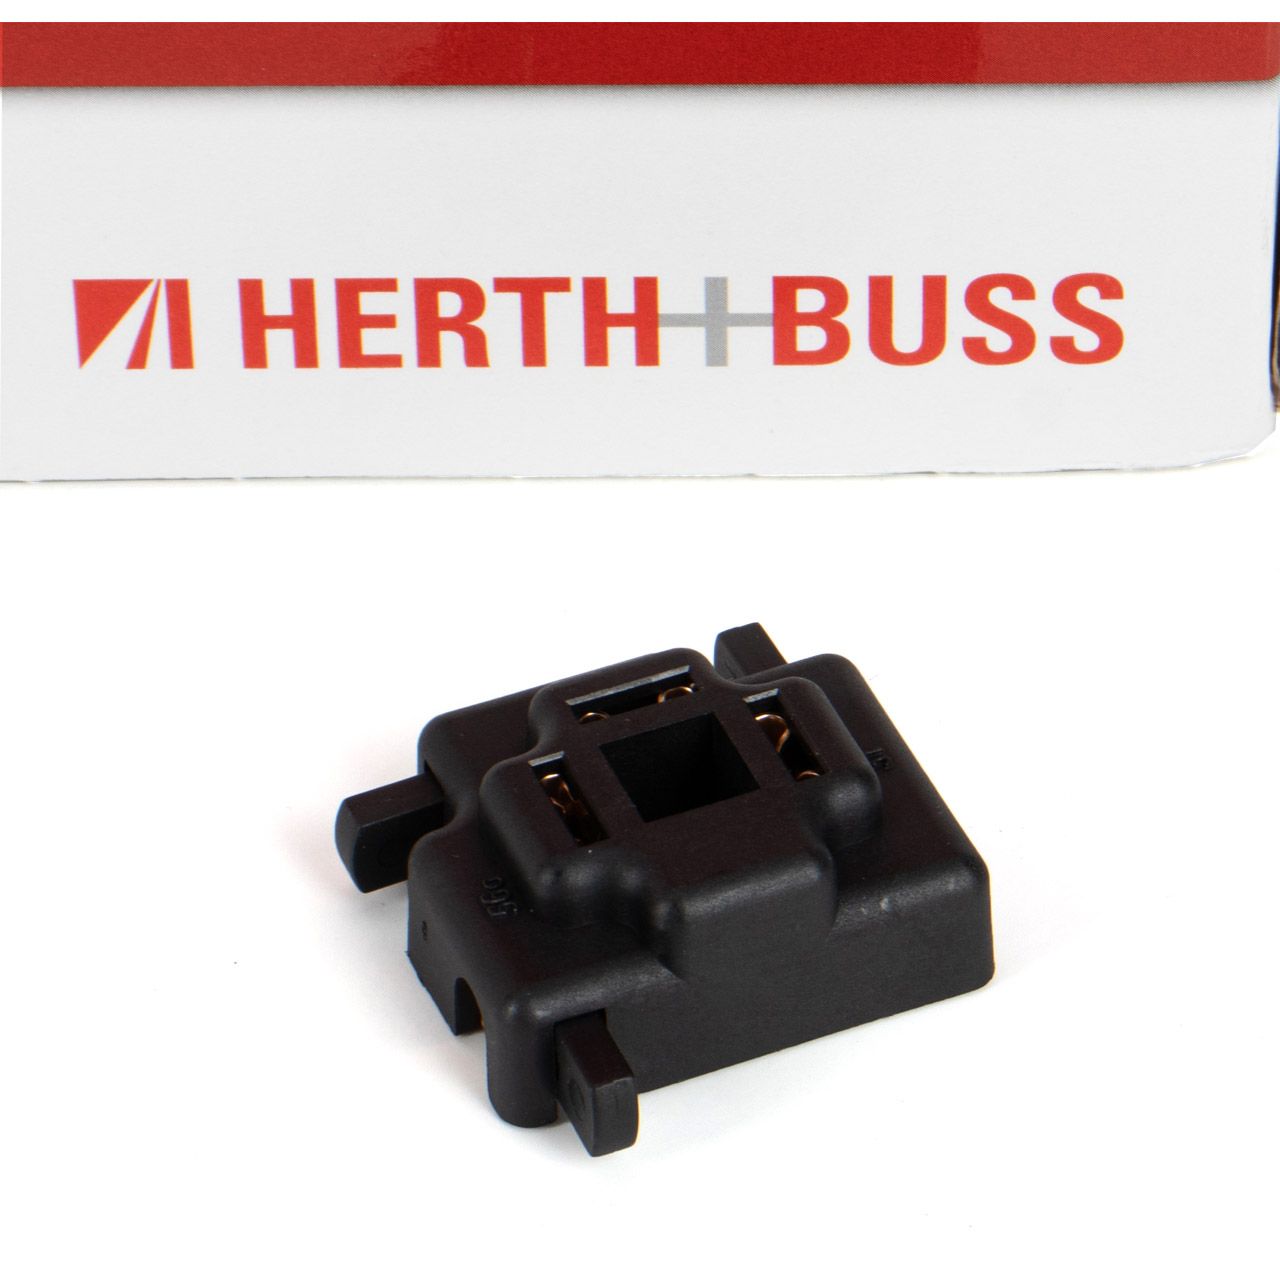 HERTH+BUSS JAKOPARTS UNIVERSAL H4 R2 Stecker Adapter Lampen Fassung Sockel Socket Licht